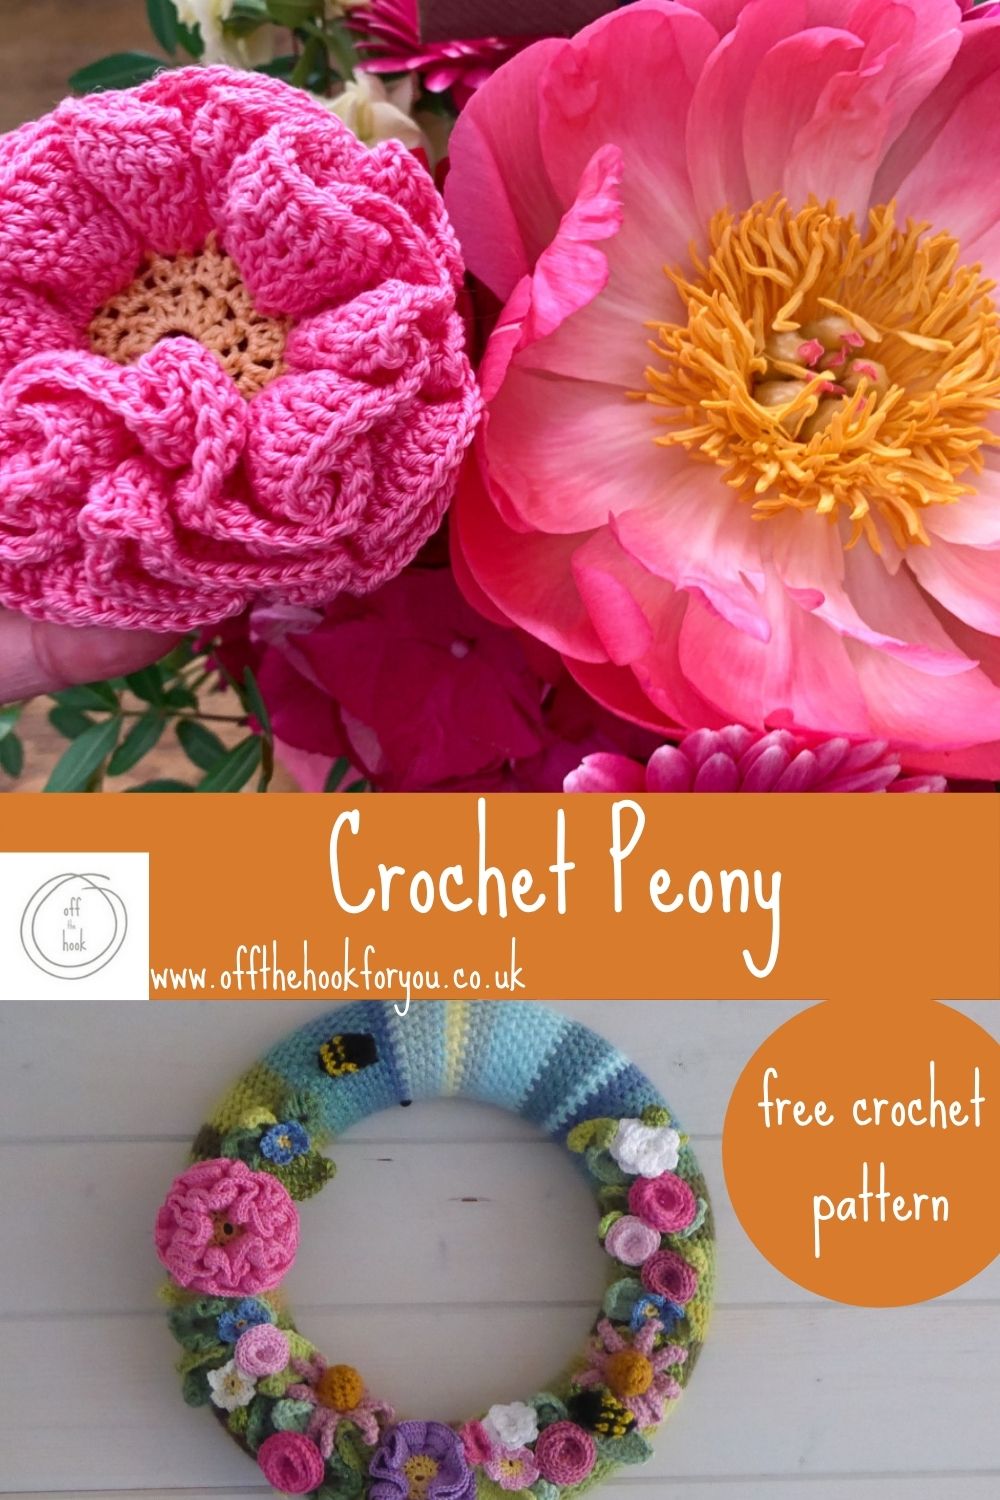 Crochet Peony pattern